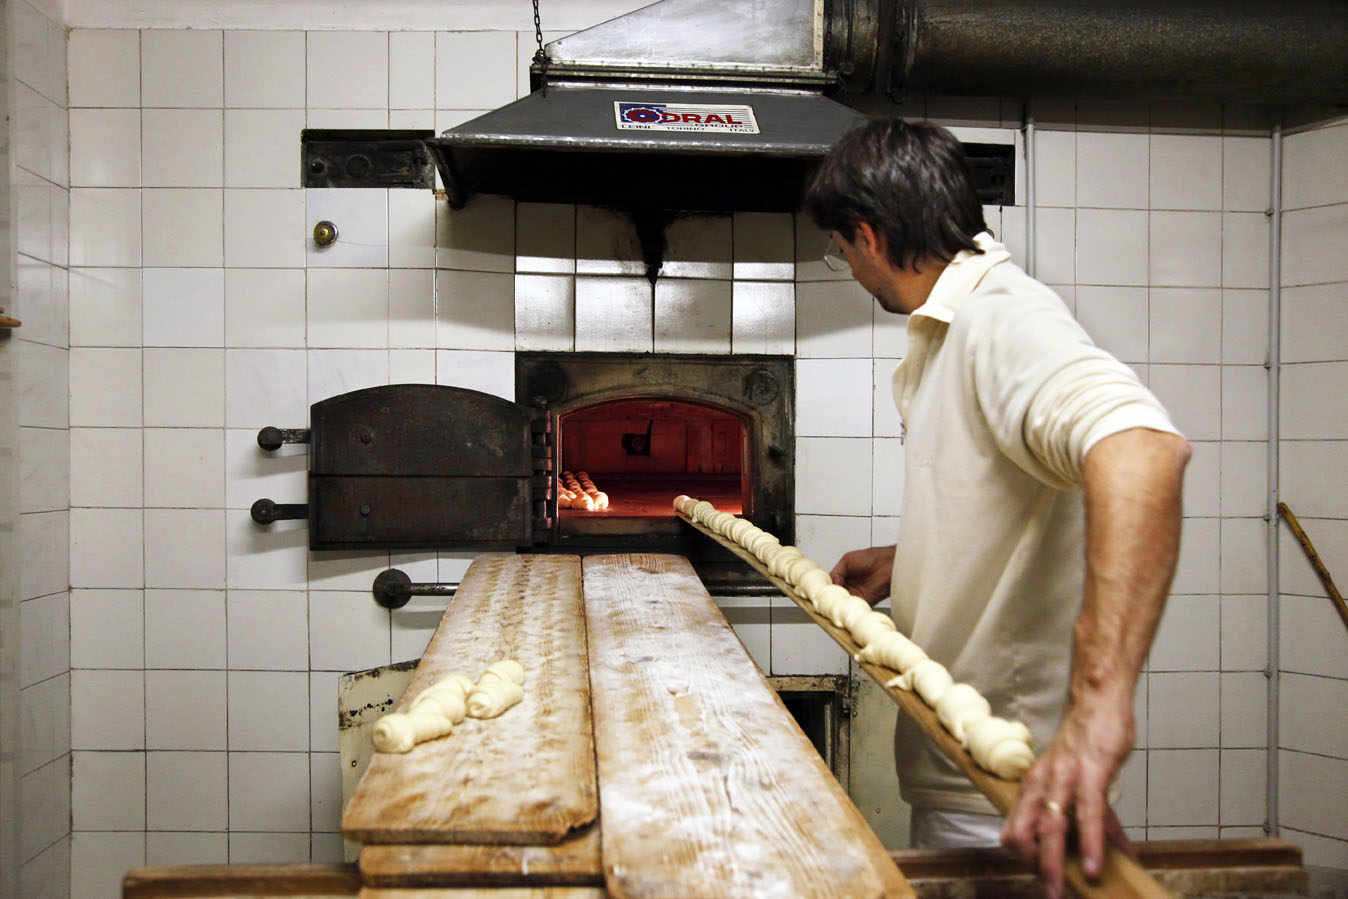 Ciopeta bread – a croissant stitched through time